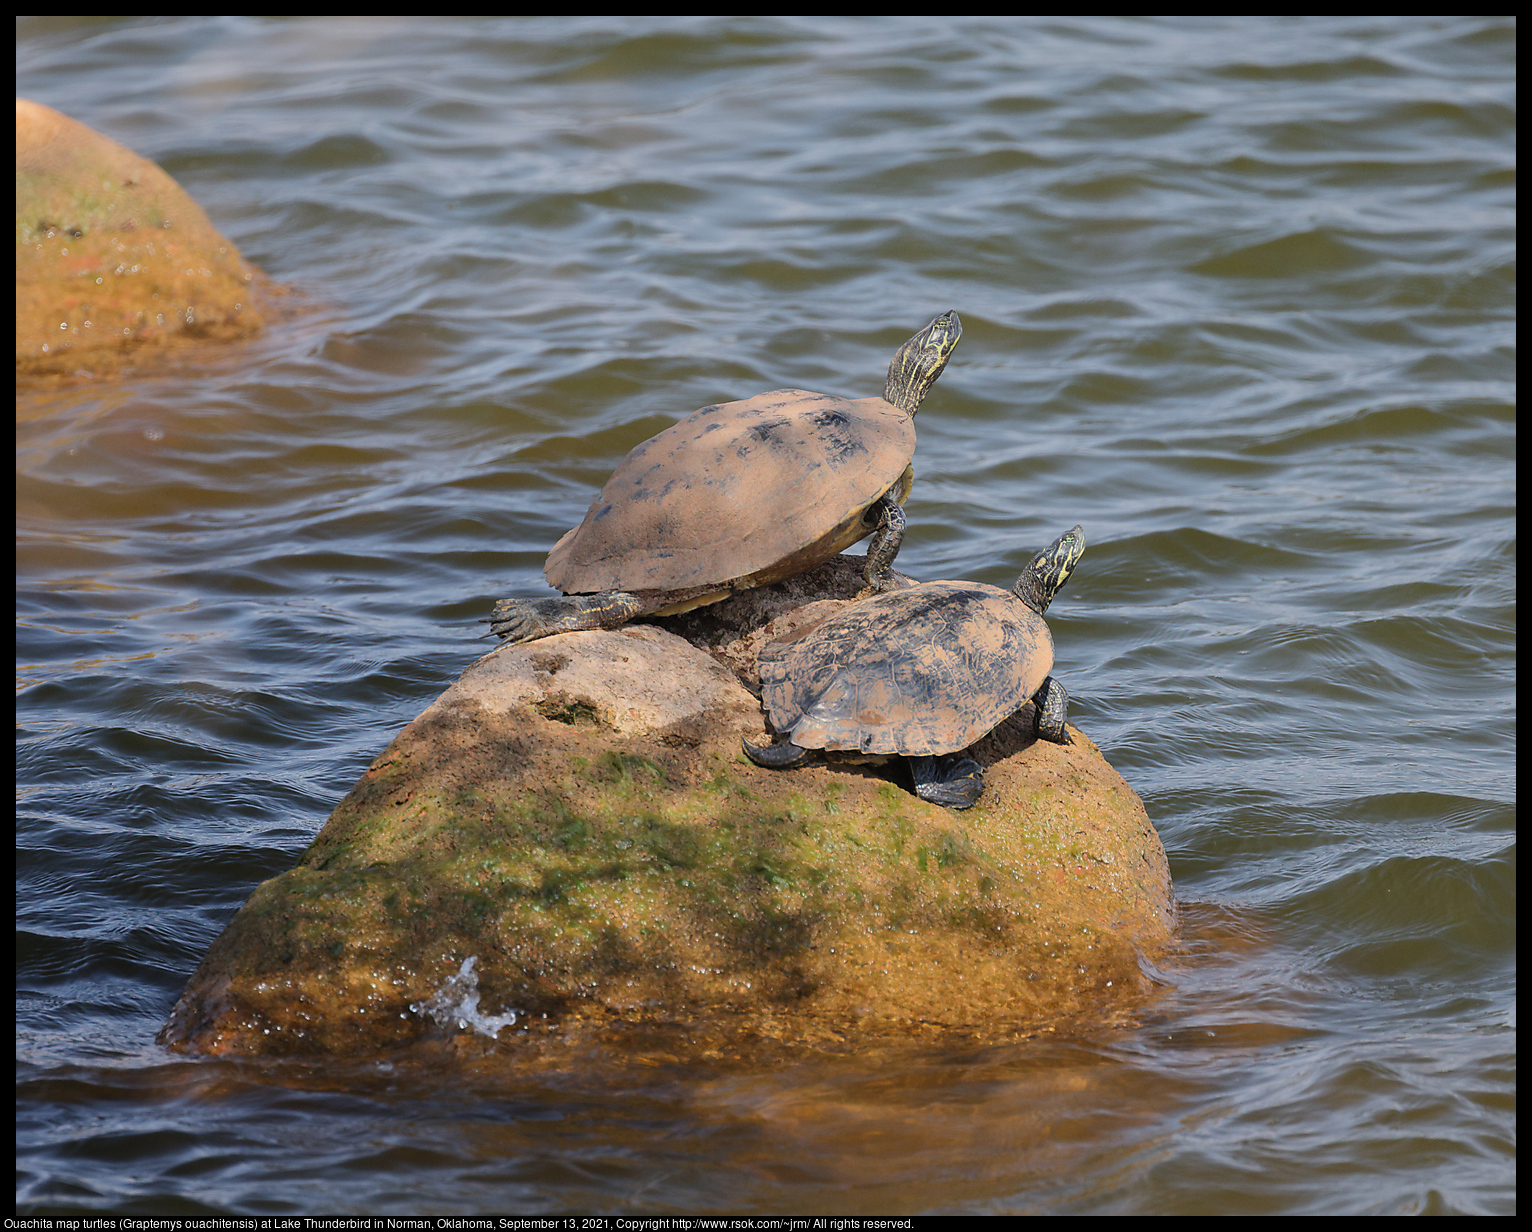 Ouachita map turtles (Graptemys ouachitensis) at Lake Thunderbird in Norman, Oklahoma, September 13, 2021